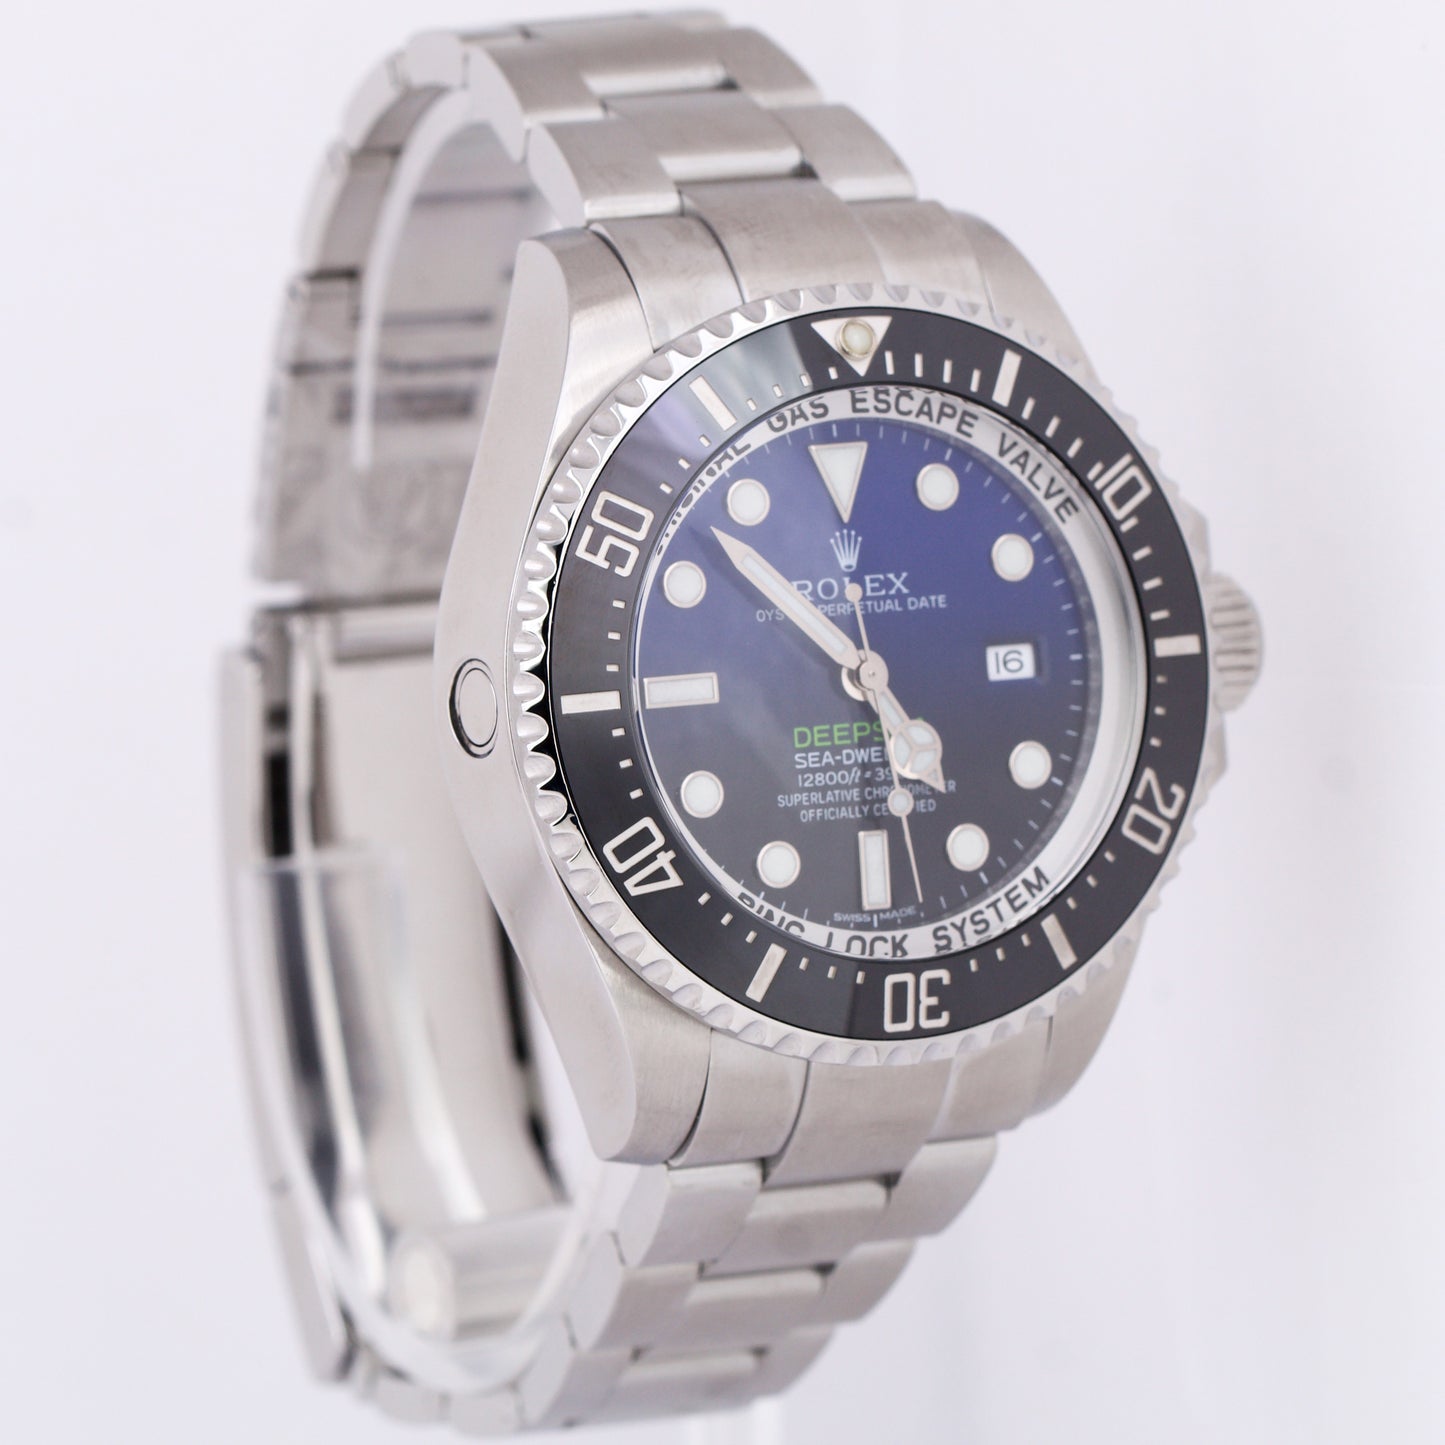 Rolex Sea-Dweller Deepsea 'James Cameron' Blue Black Stainless 116660 44mm Watch